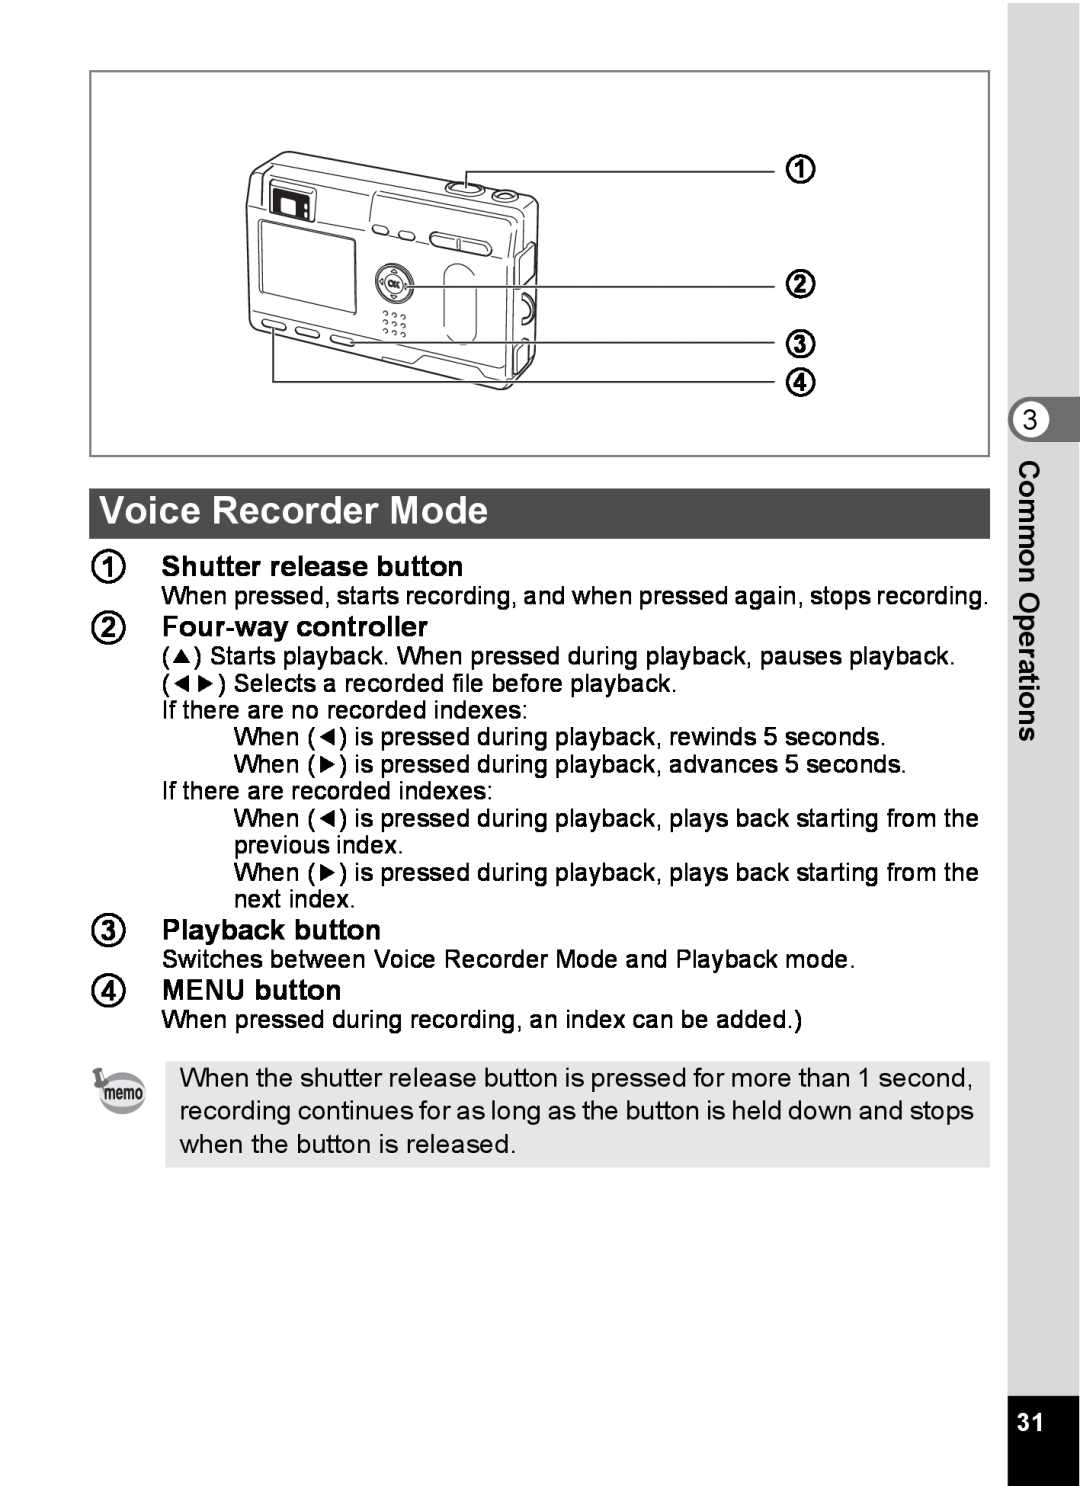 Pentax S4 manual Shutter release button, Four-way controller, Voice Recorder Mode, Playback button, MENU button 